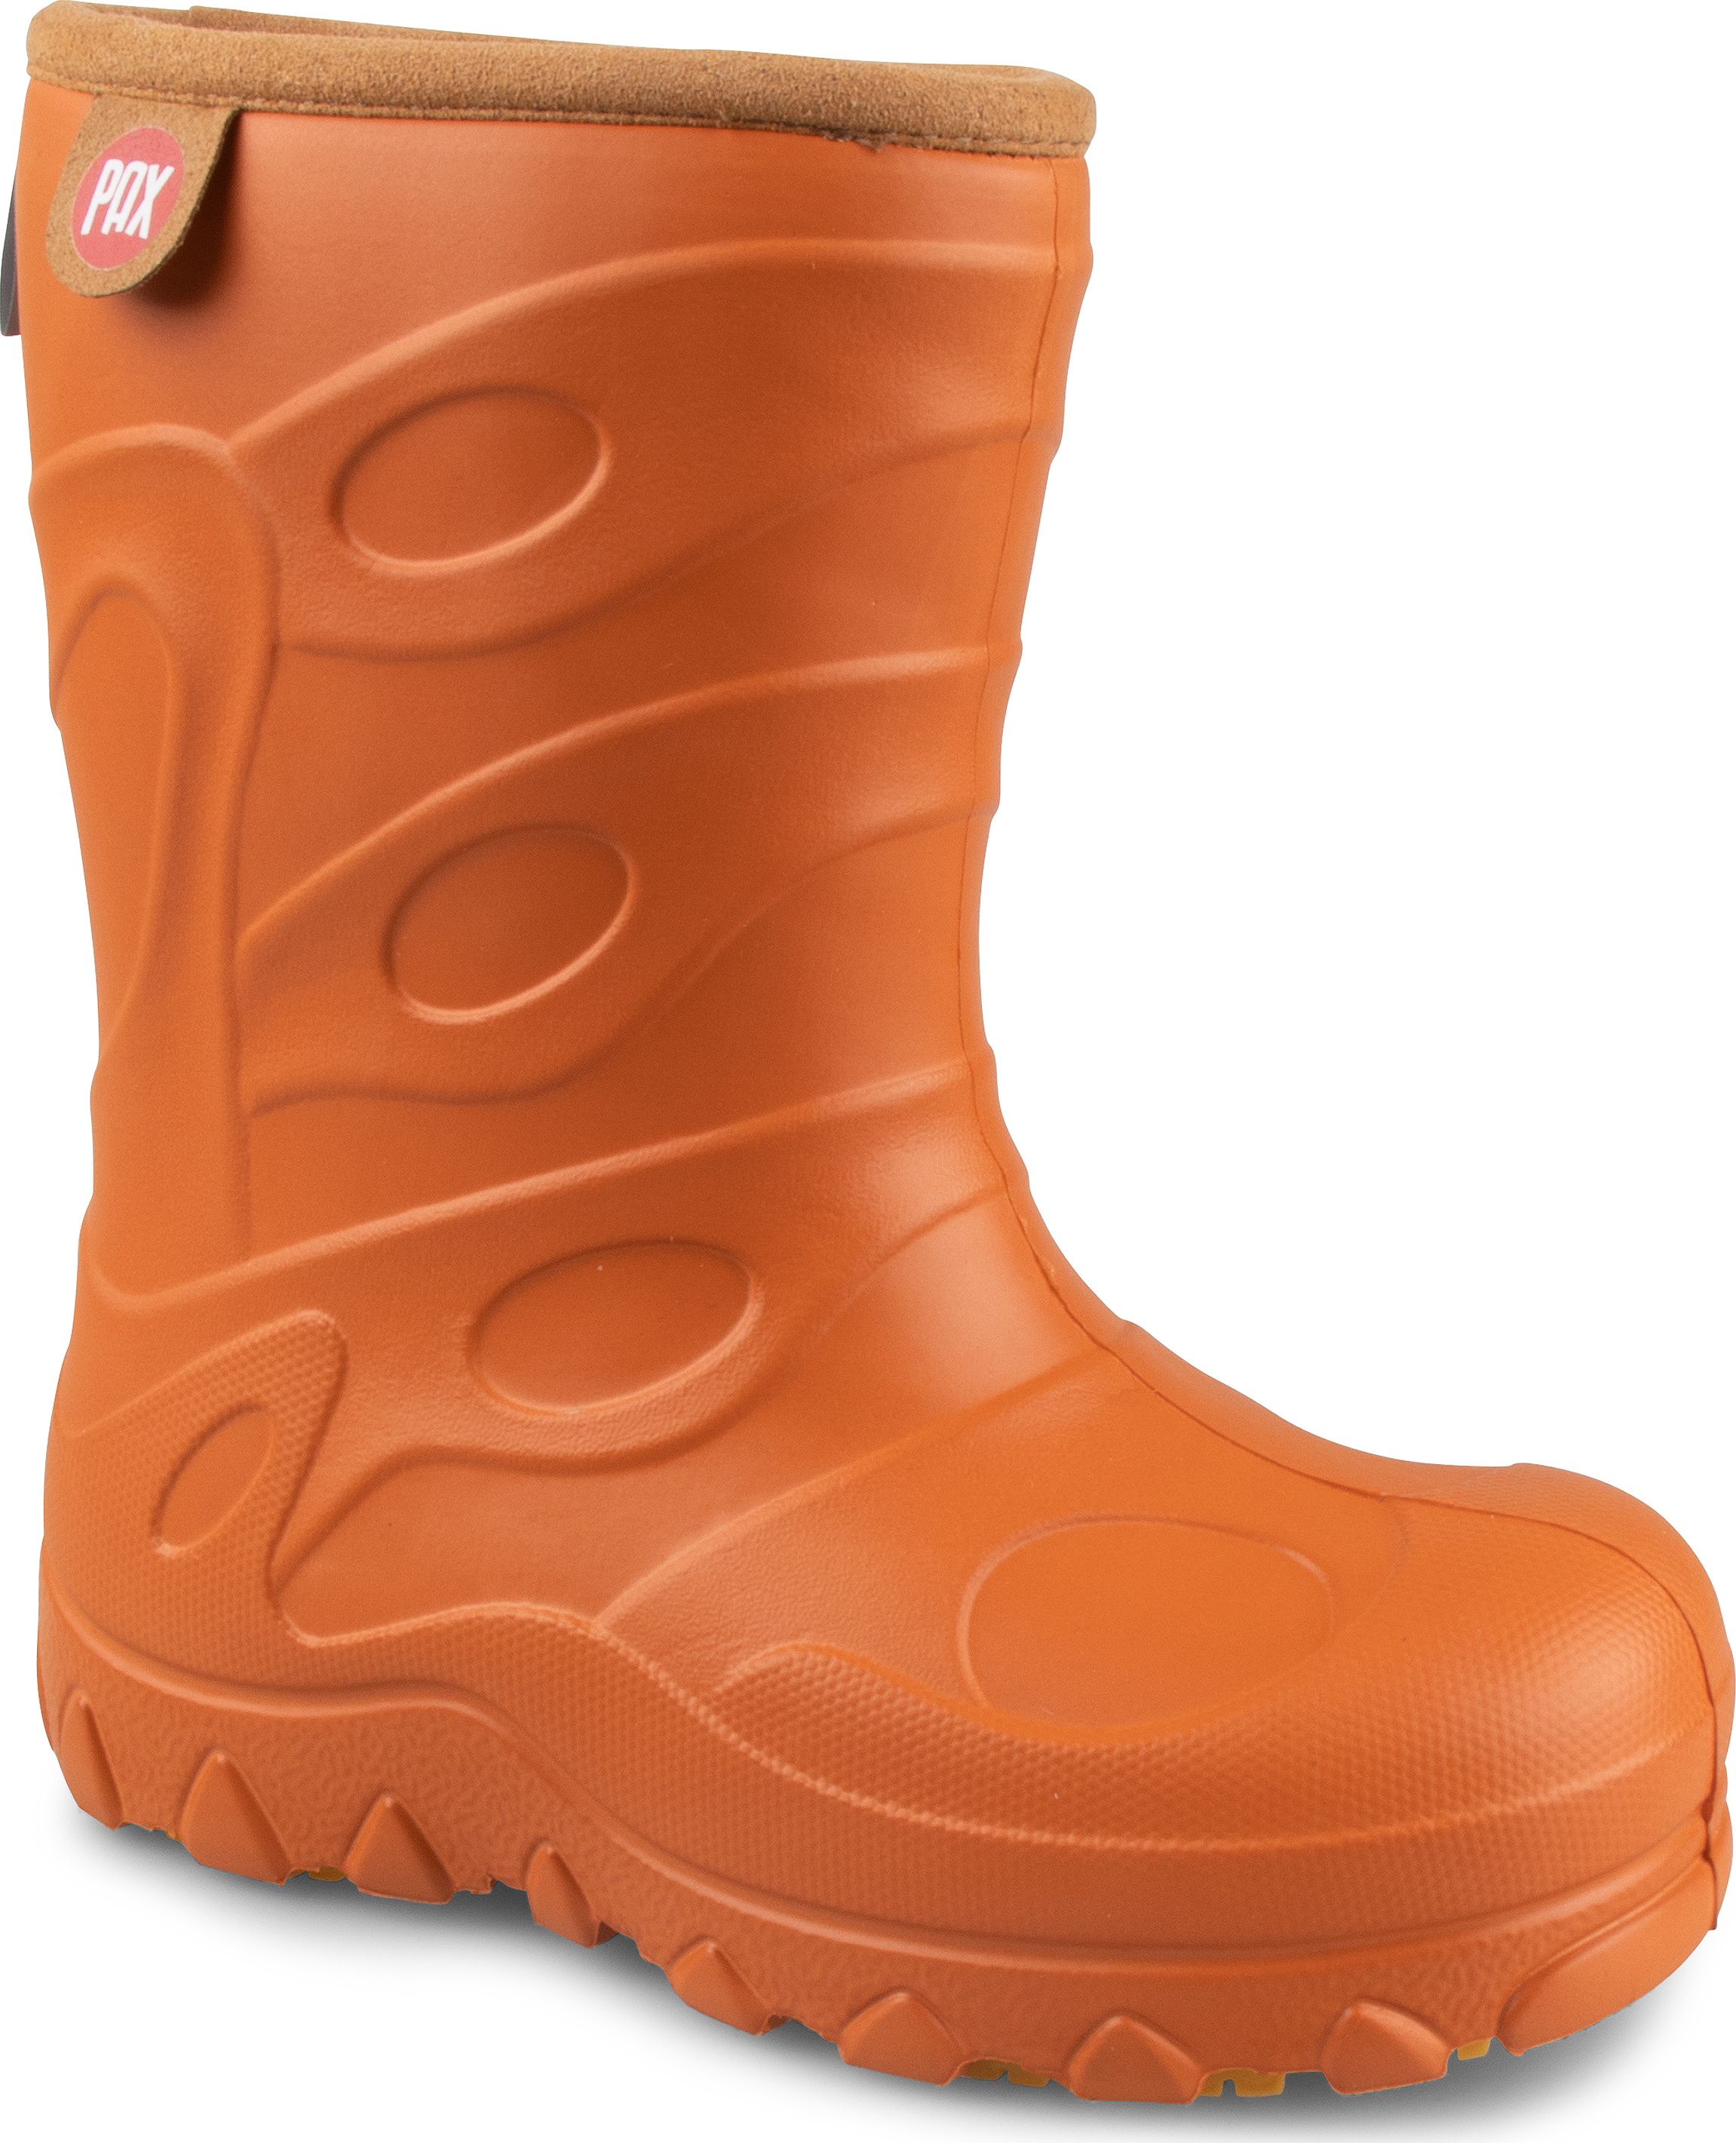 Pax Kids’ Inso Rubber Boot Orange